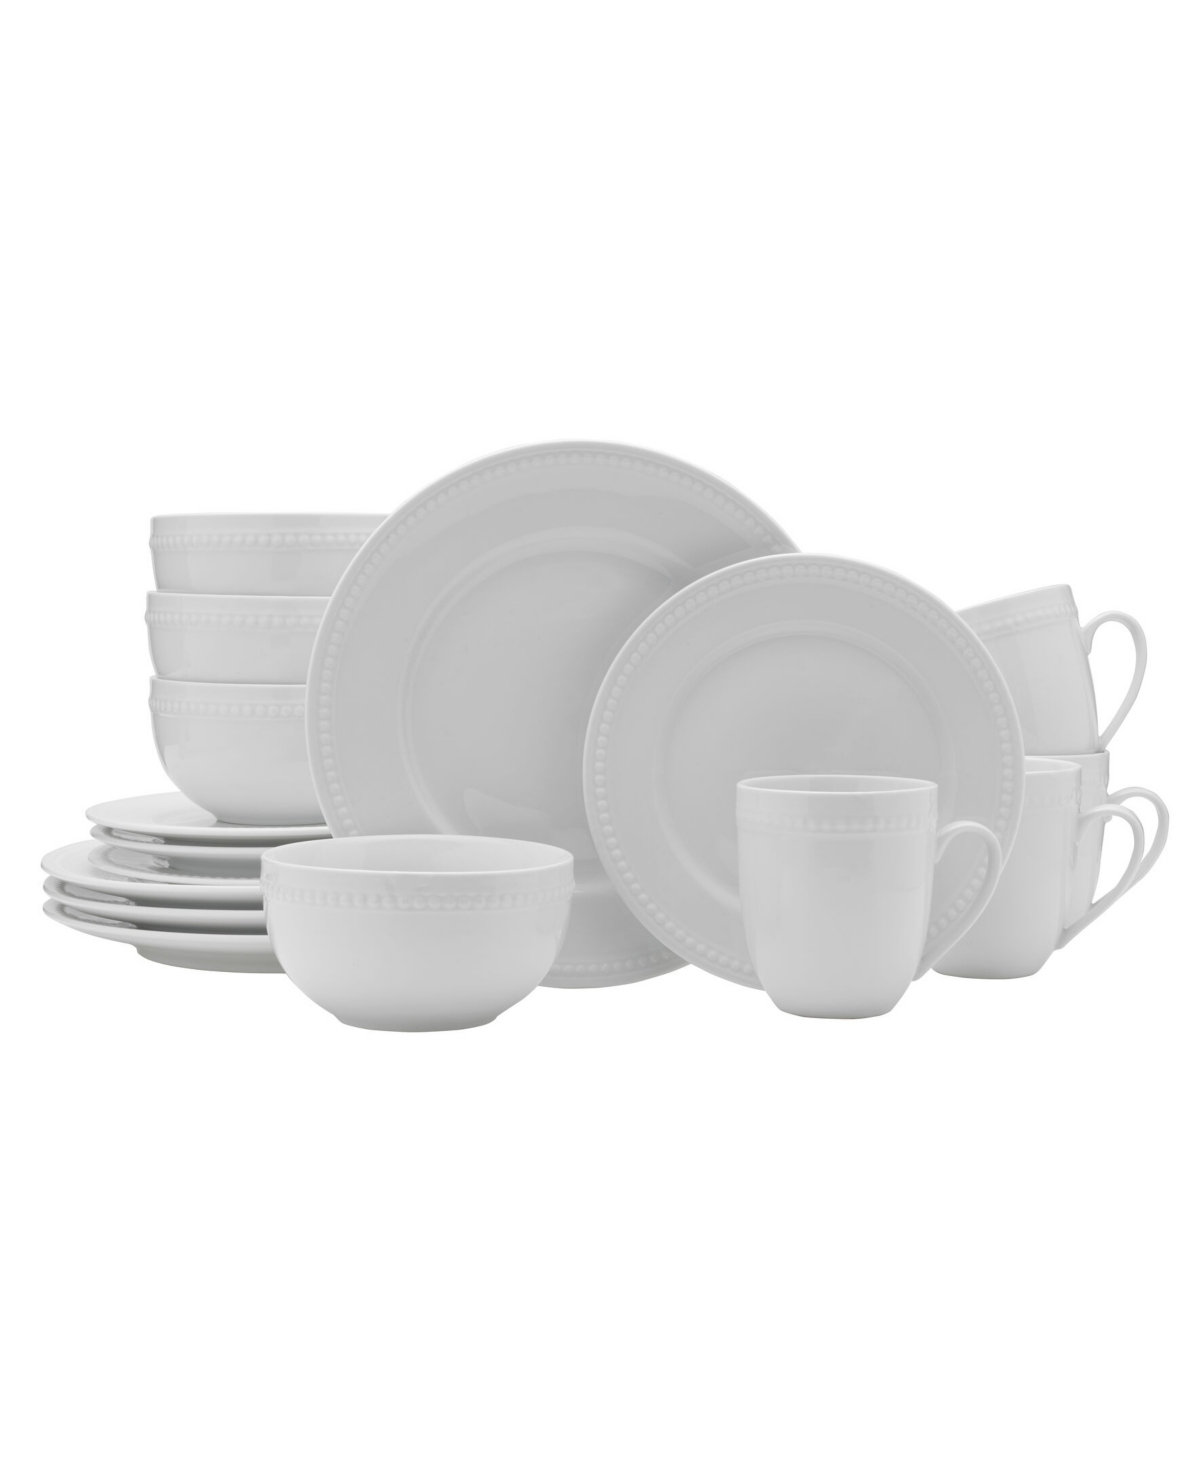 Everyday Whiteware Beaded 16 Piece Dinnerware Set, Service for 4 - White